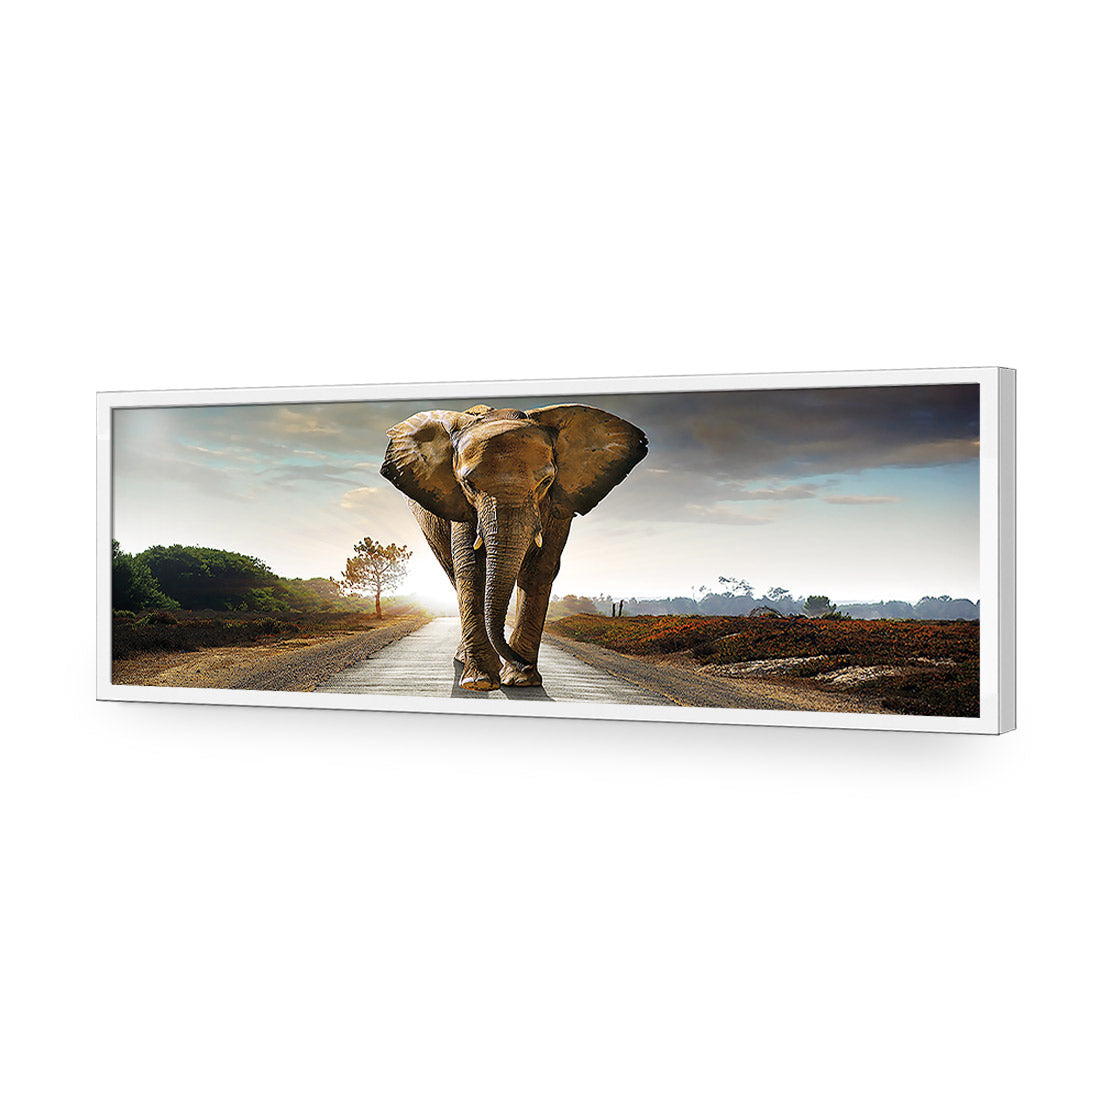 Determined Elephant, Long Acrylic Glass Art-Acrylic-Wall Art Design-Without Border-Acrylic - White Frame-60x20cm-Wall Art Designs